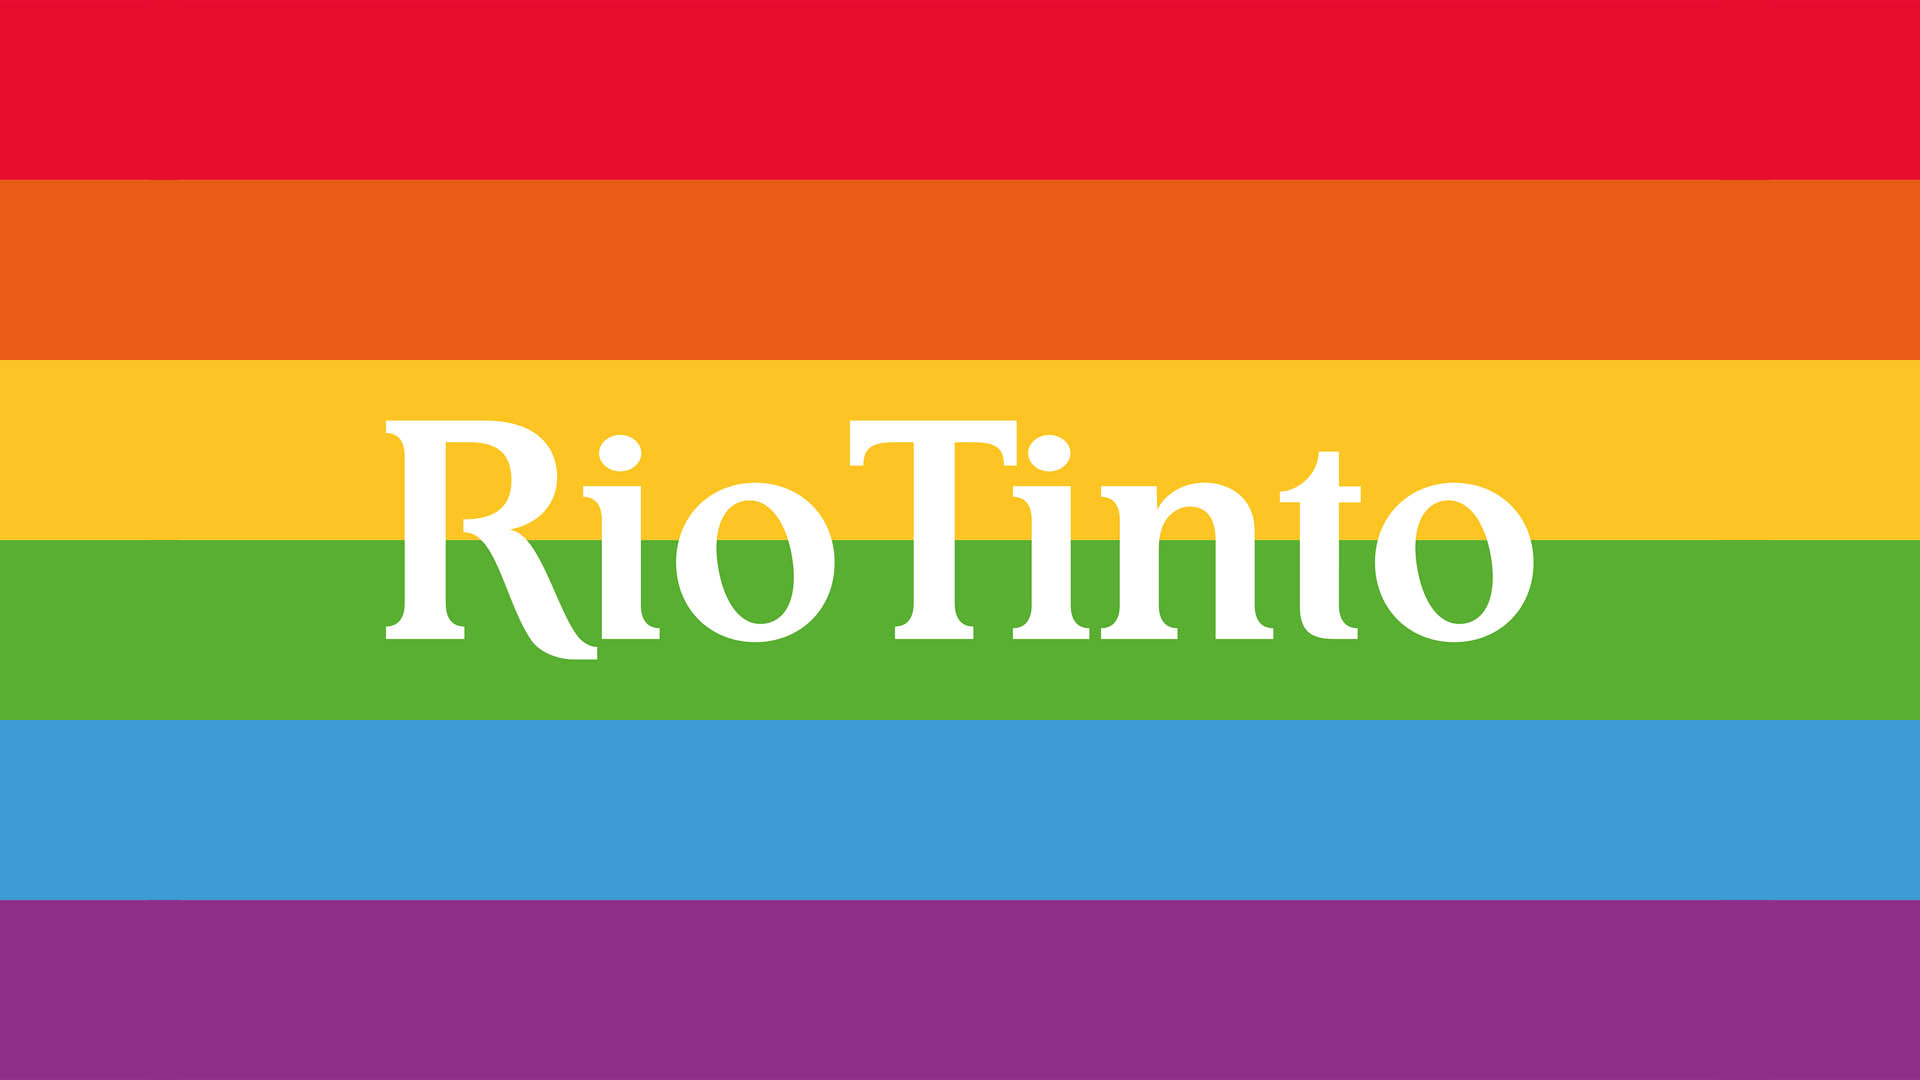 Rio Tinto's rainbow logo